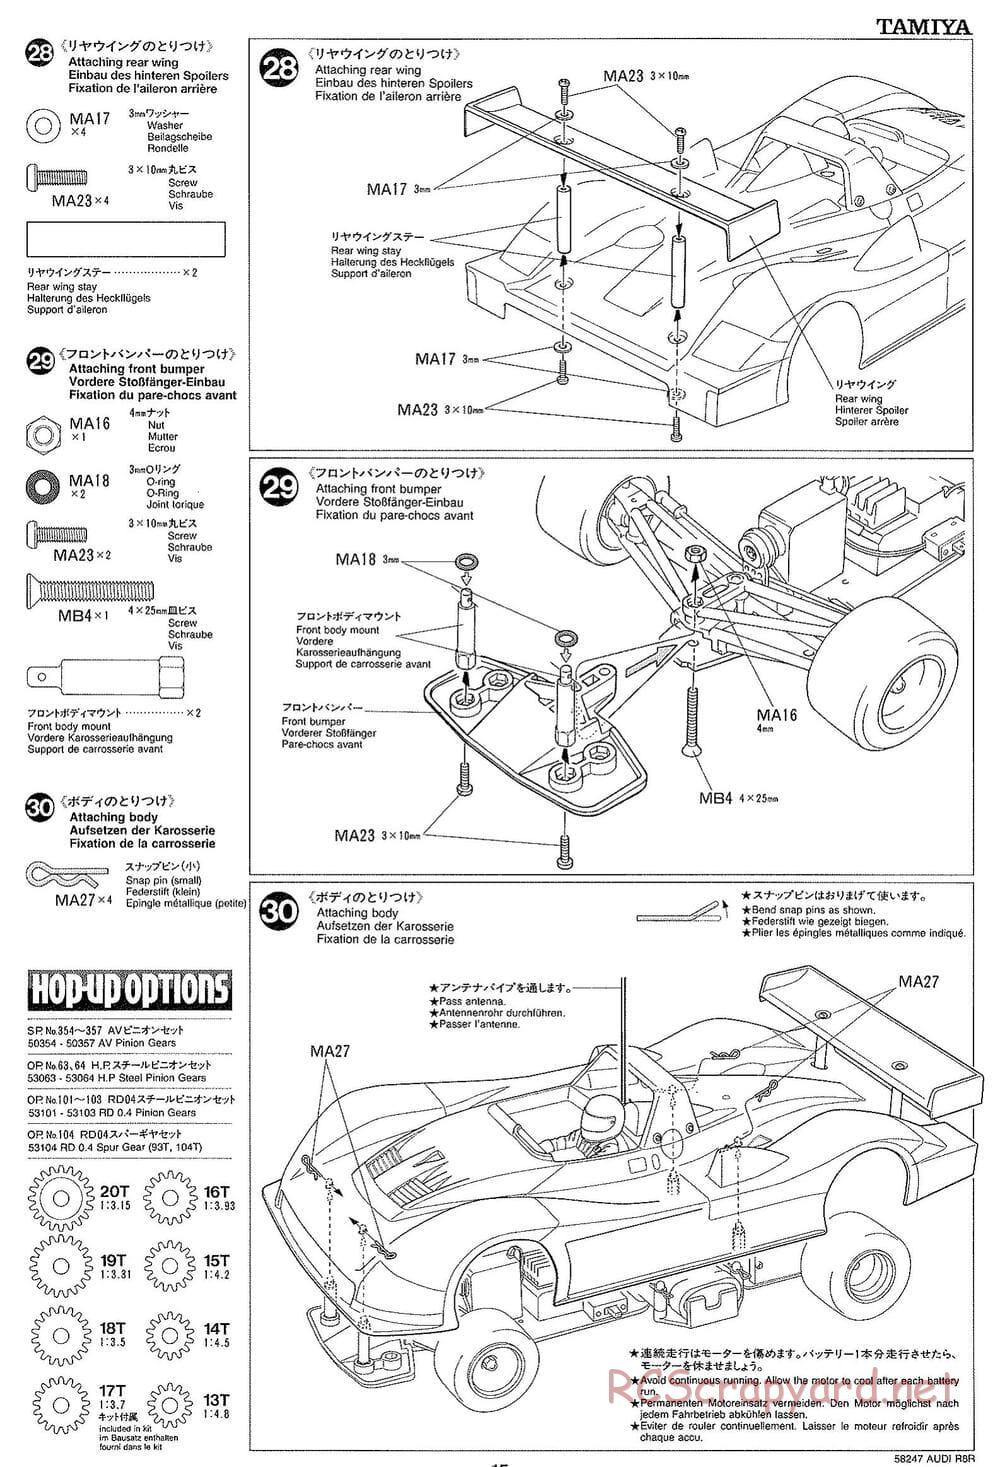 Tamiya - Audi R8R - F103LM Chassis - Manual - Page 15